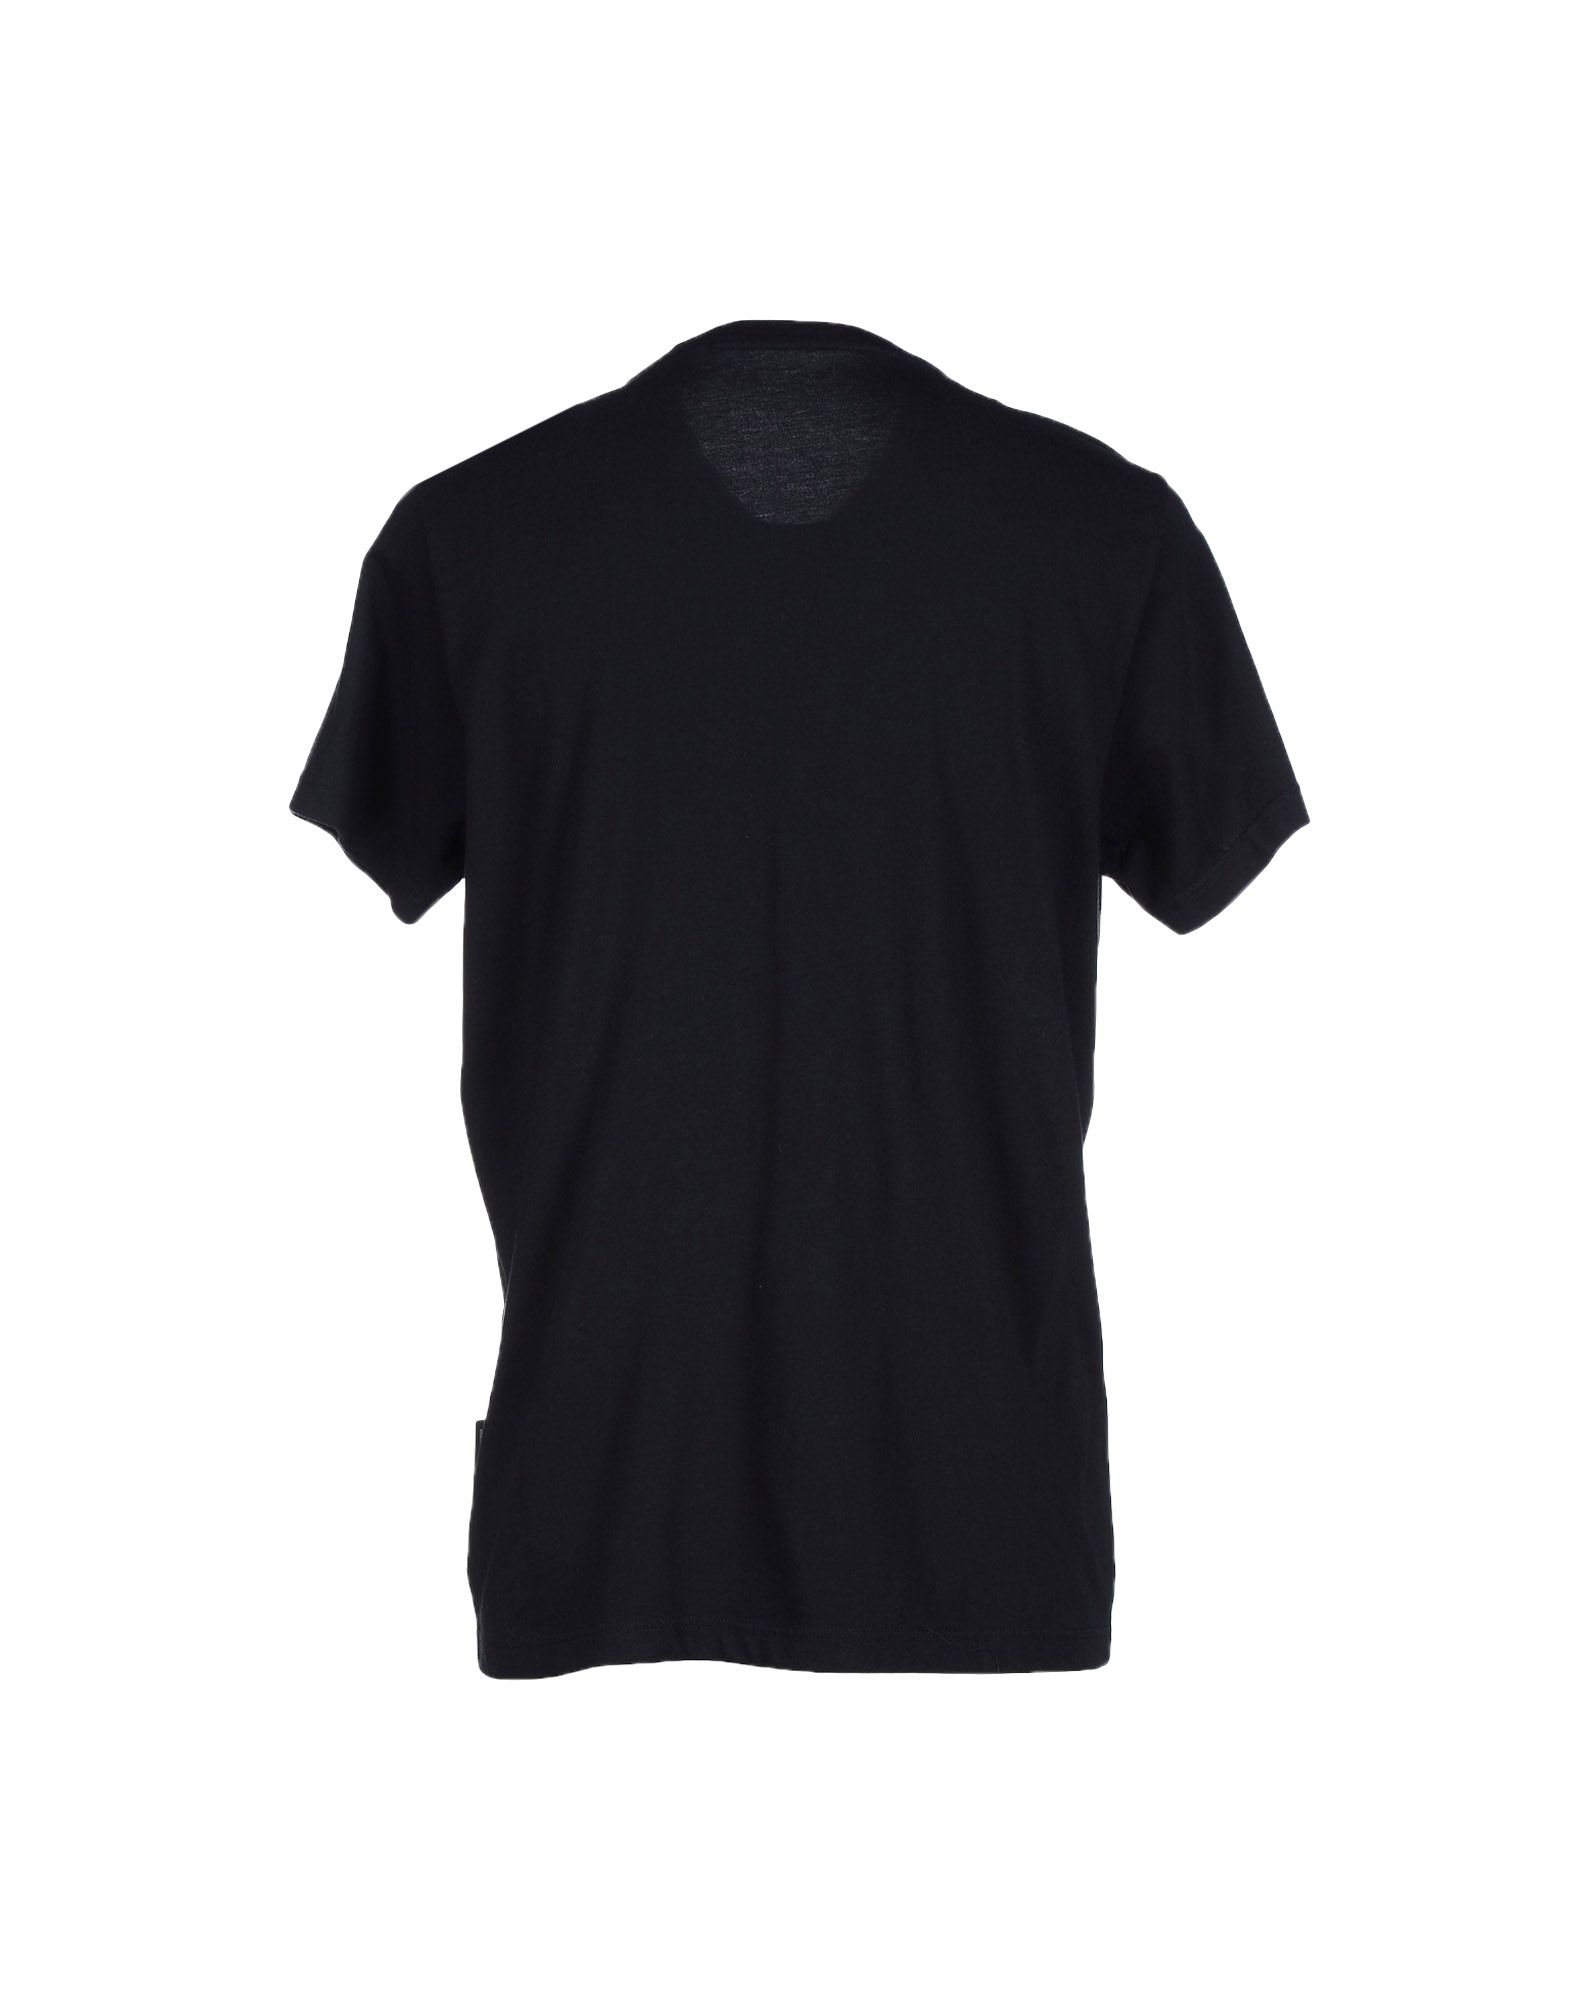 Pirelli pzero T-shirt in Black for Men | Lyst